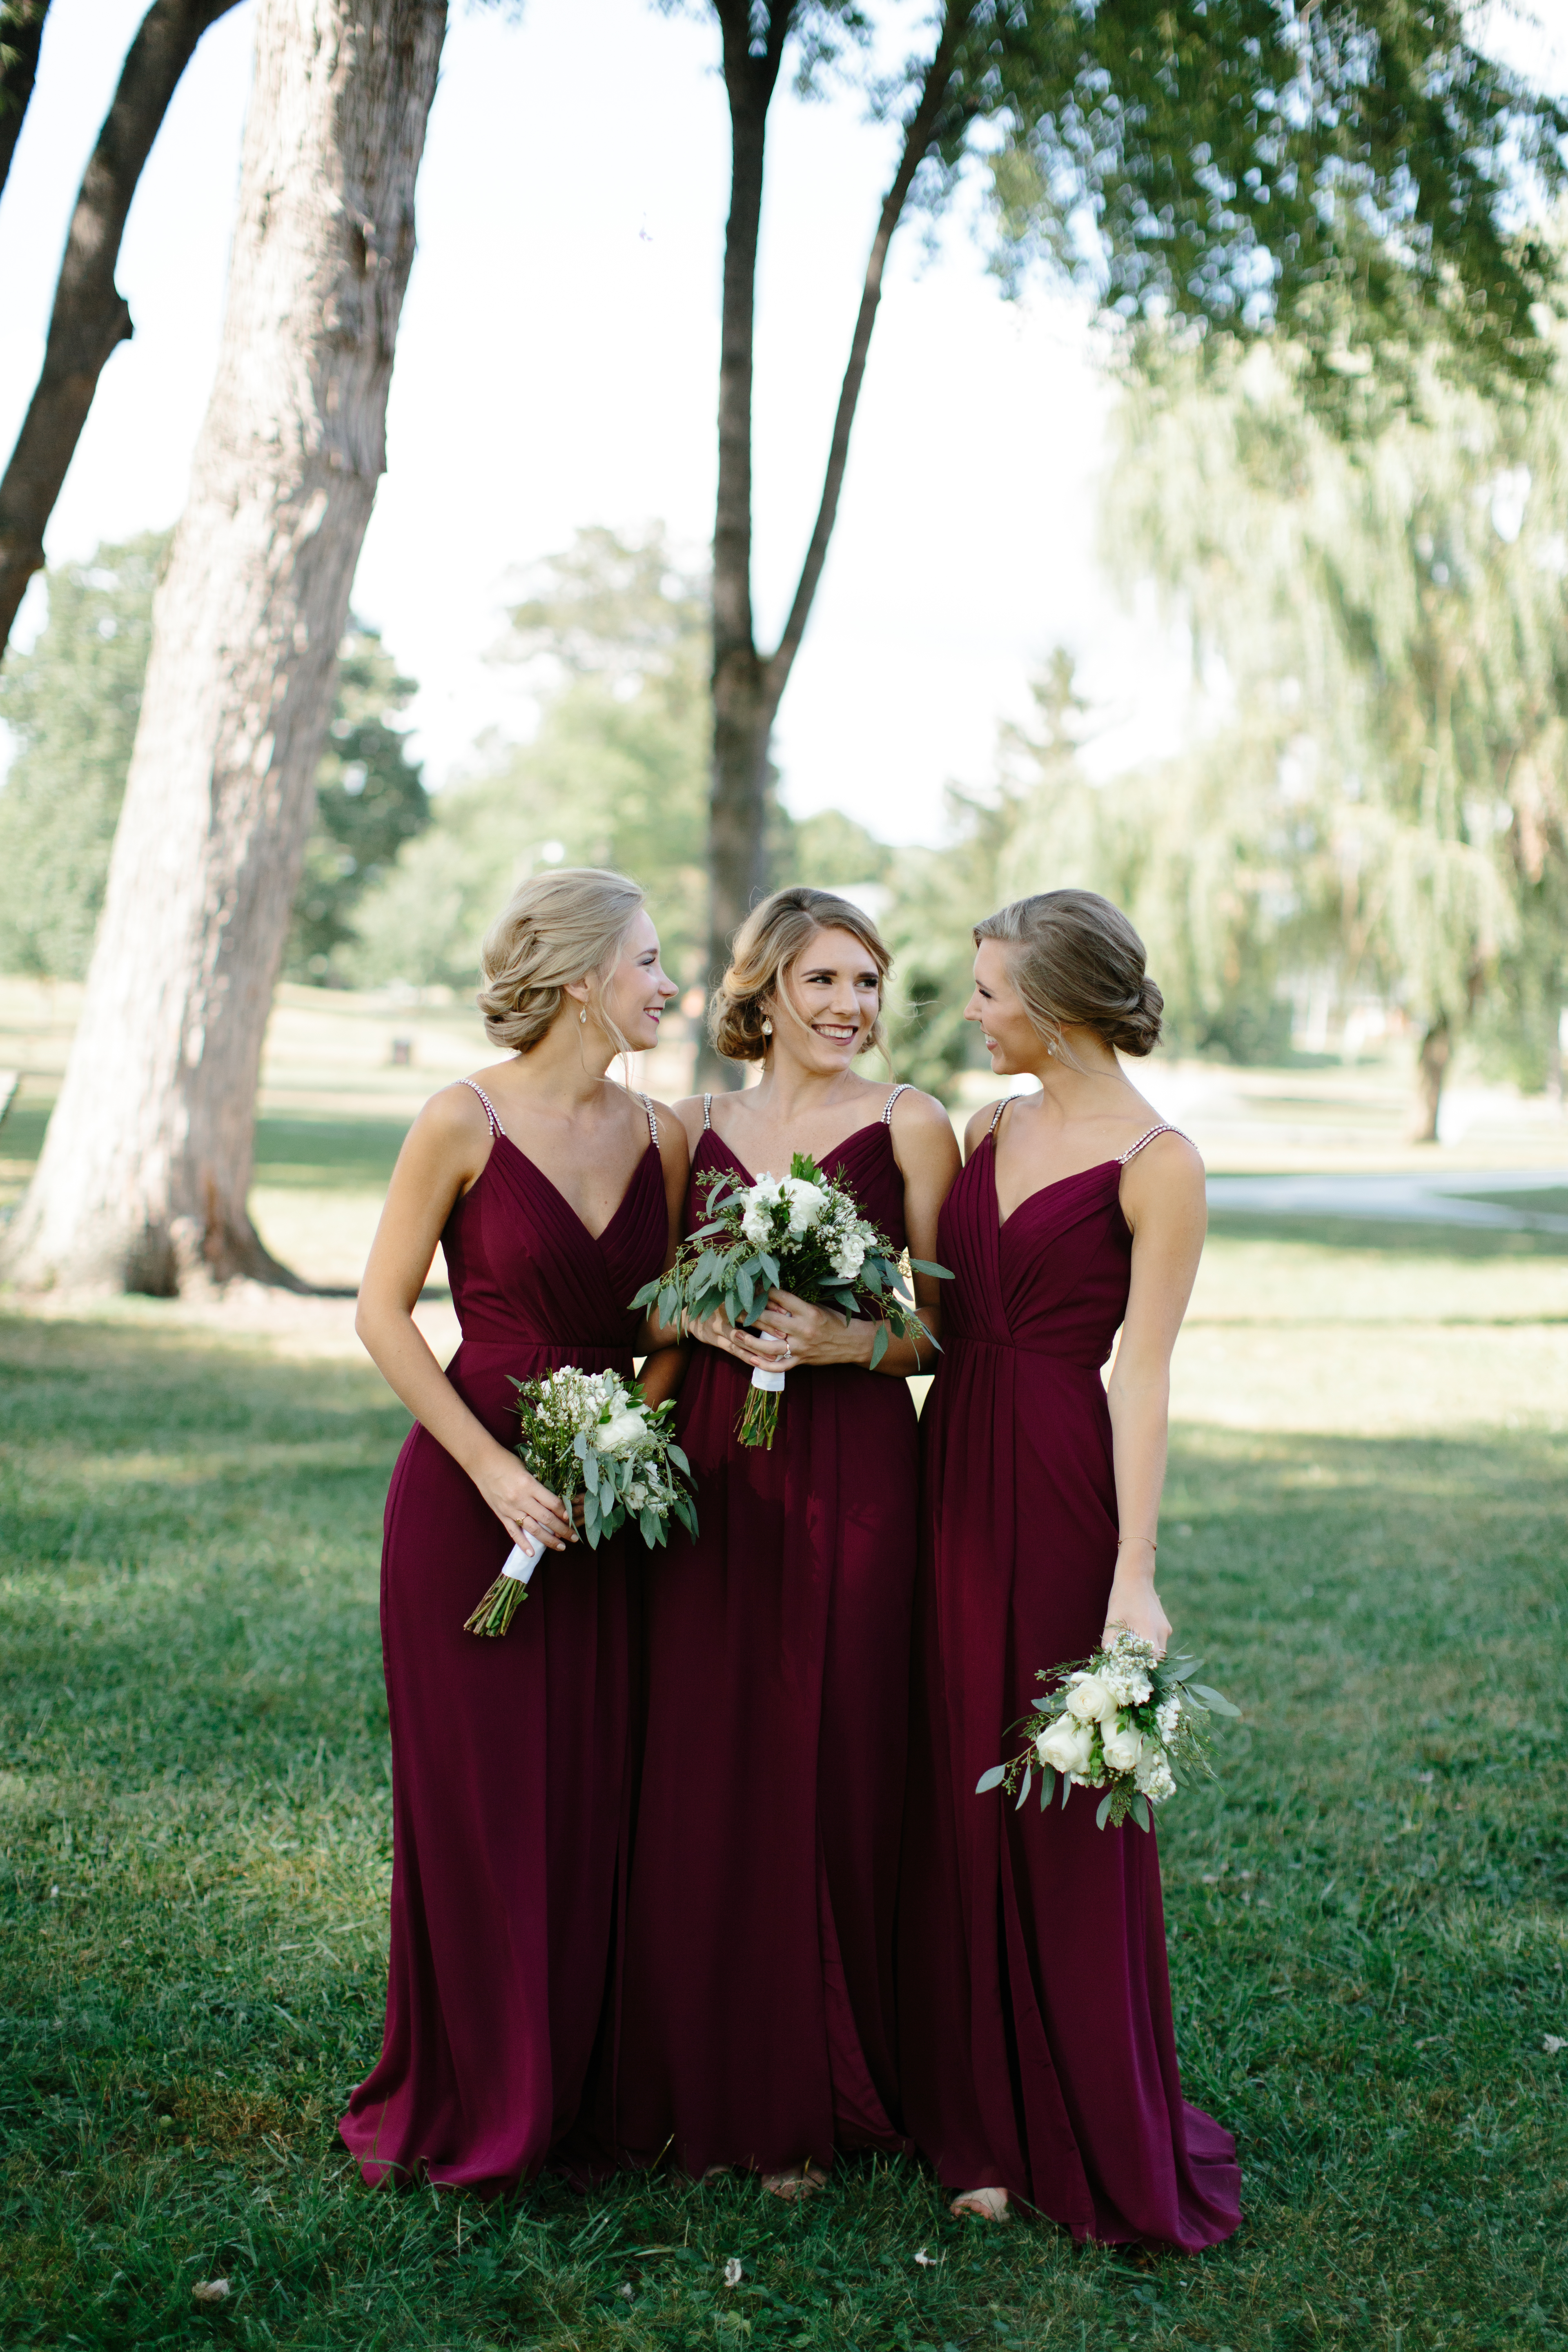 bridesmaids in maroon dresses from David's bridal